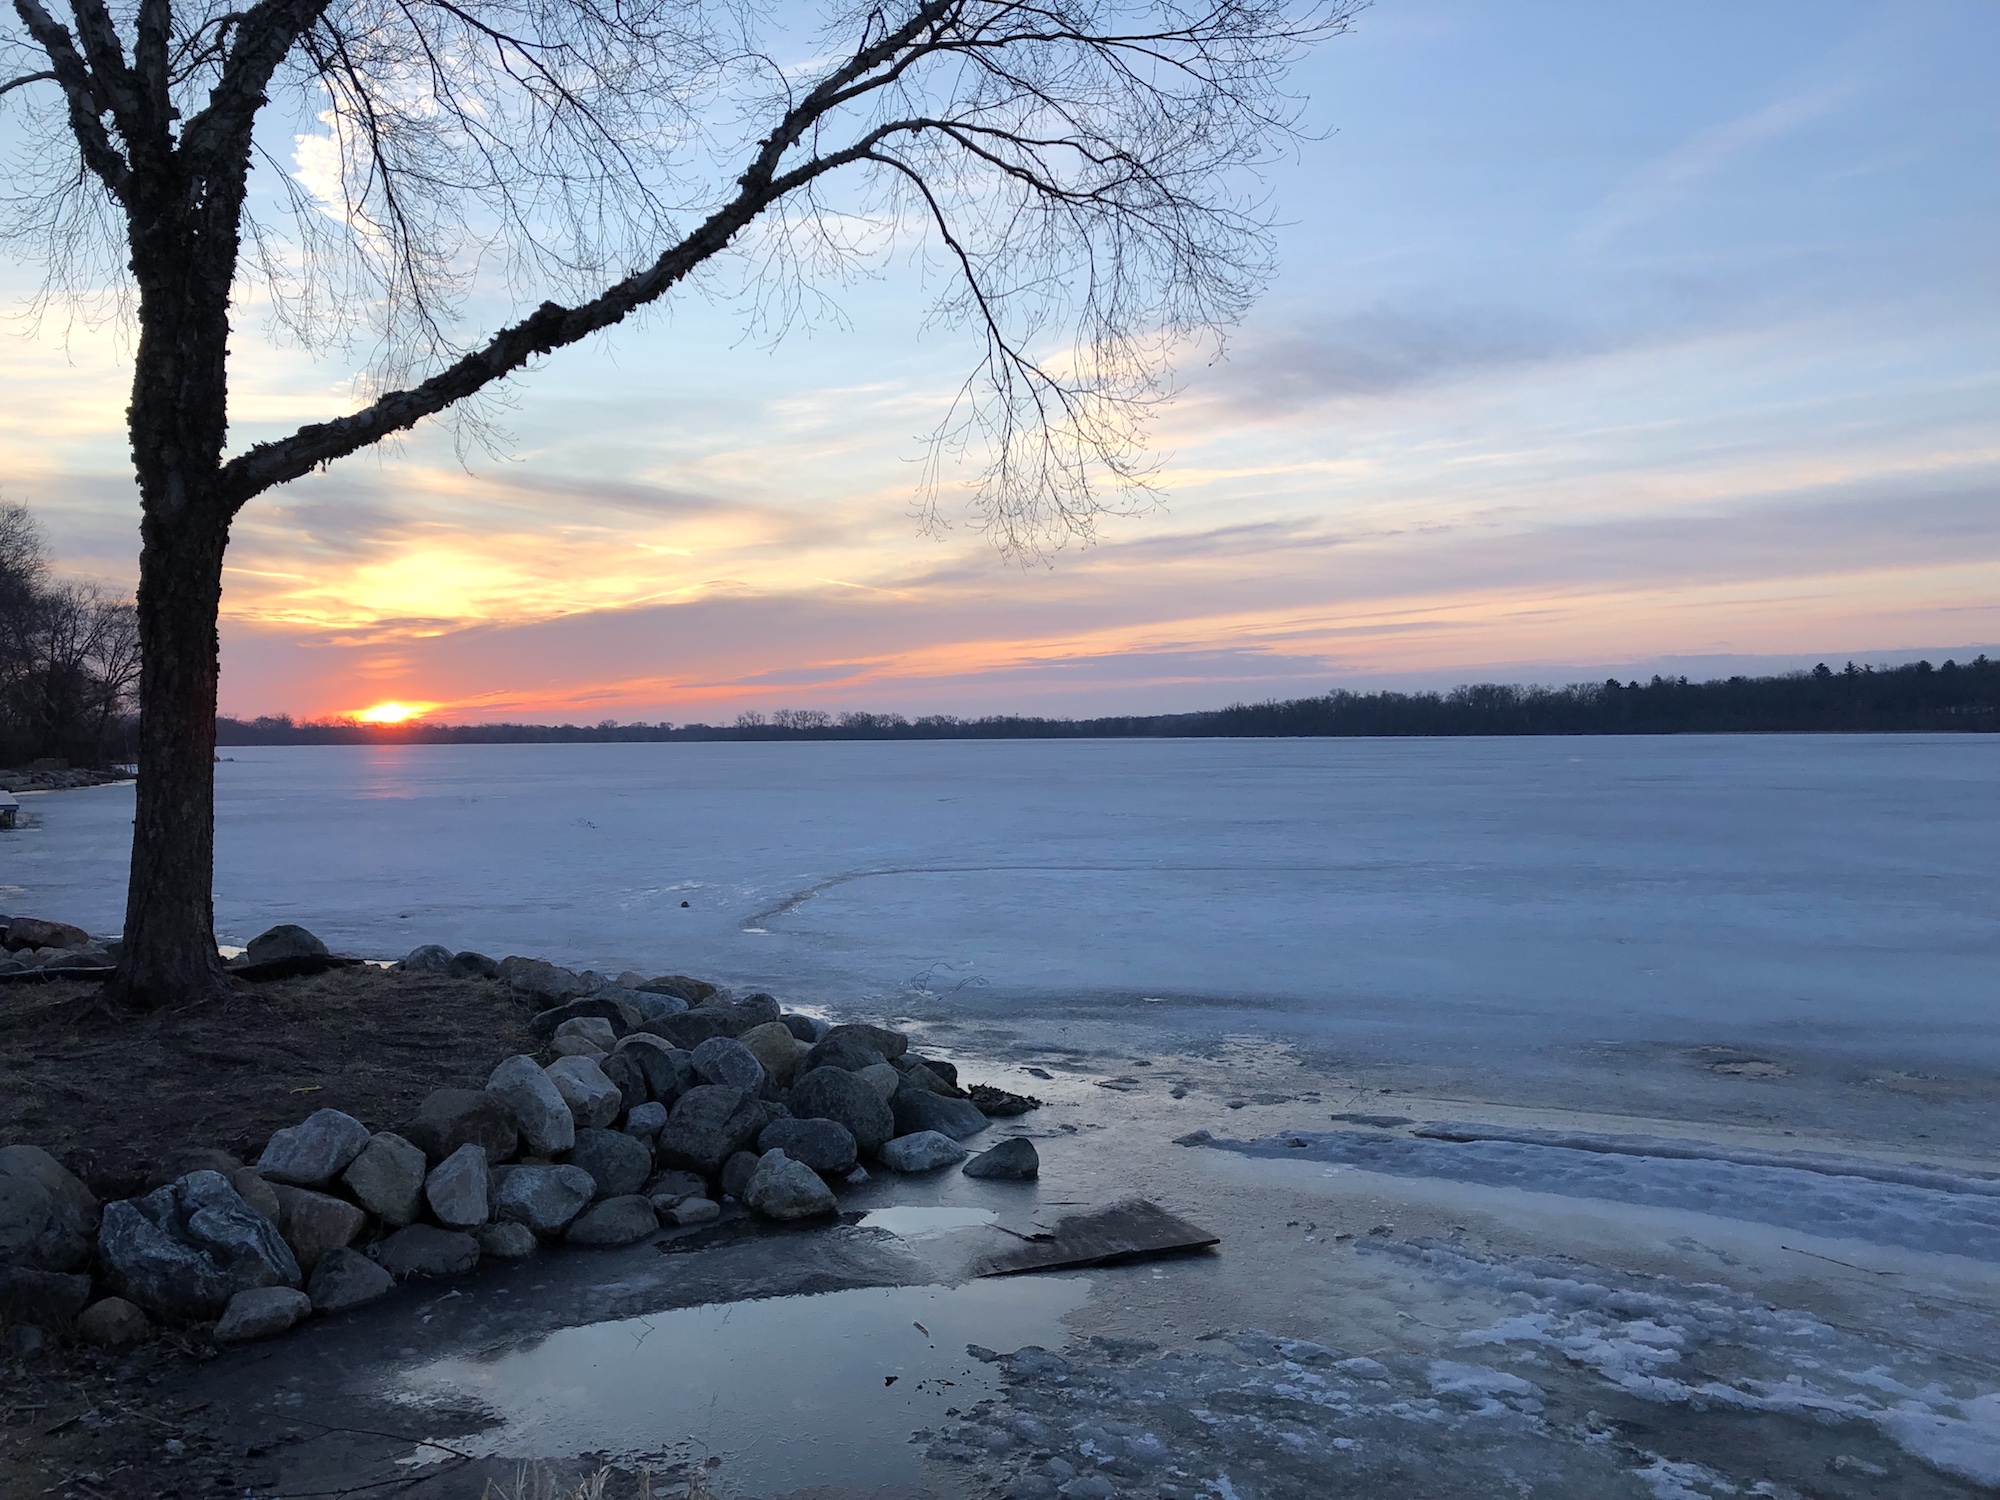 Lake Wingra on March 20, 2019.